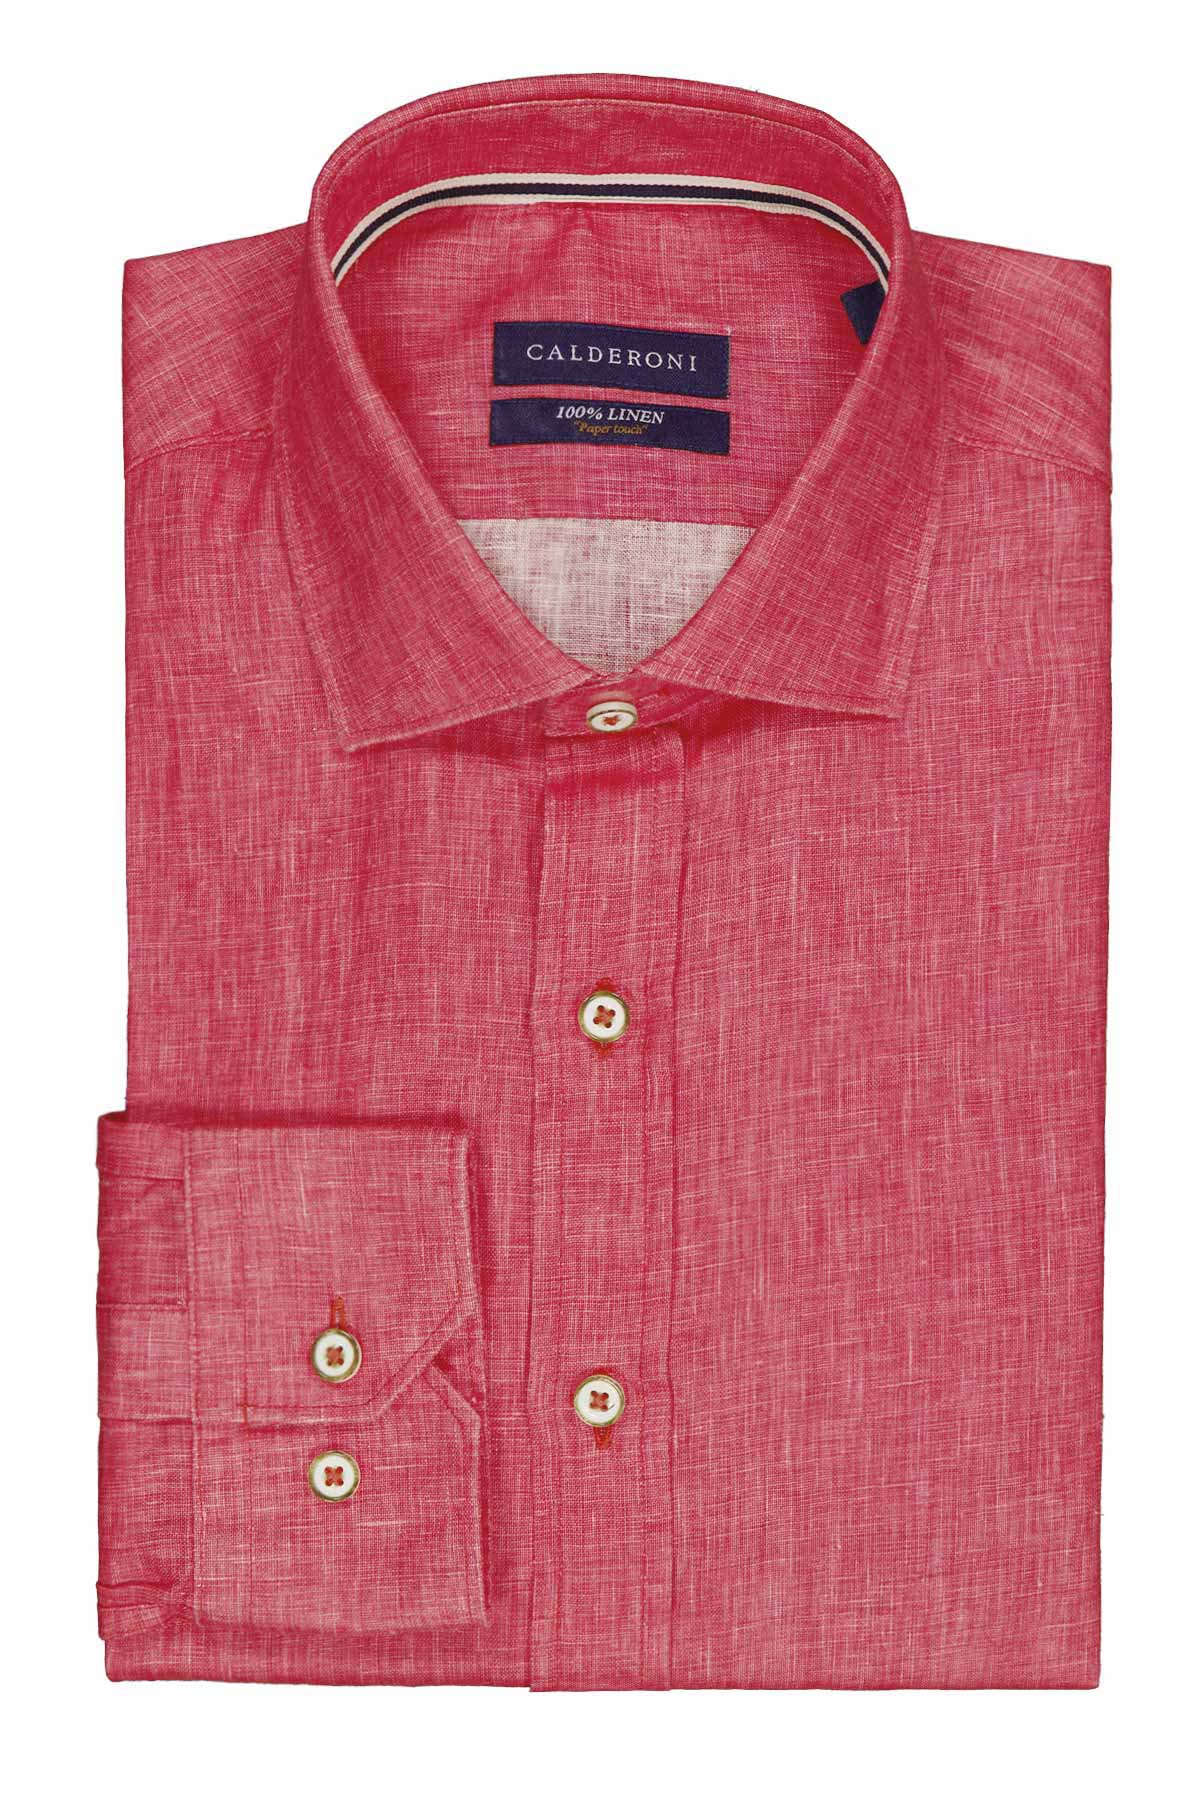 Camisa Casual LINEN Calderoni Rojo Contemporary Fit